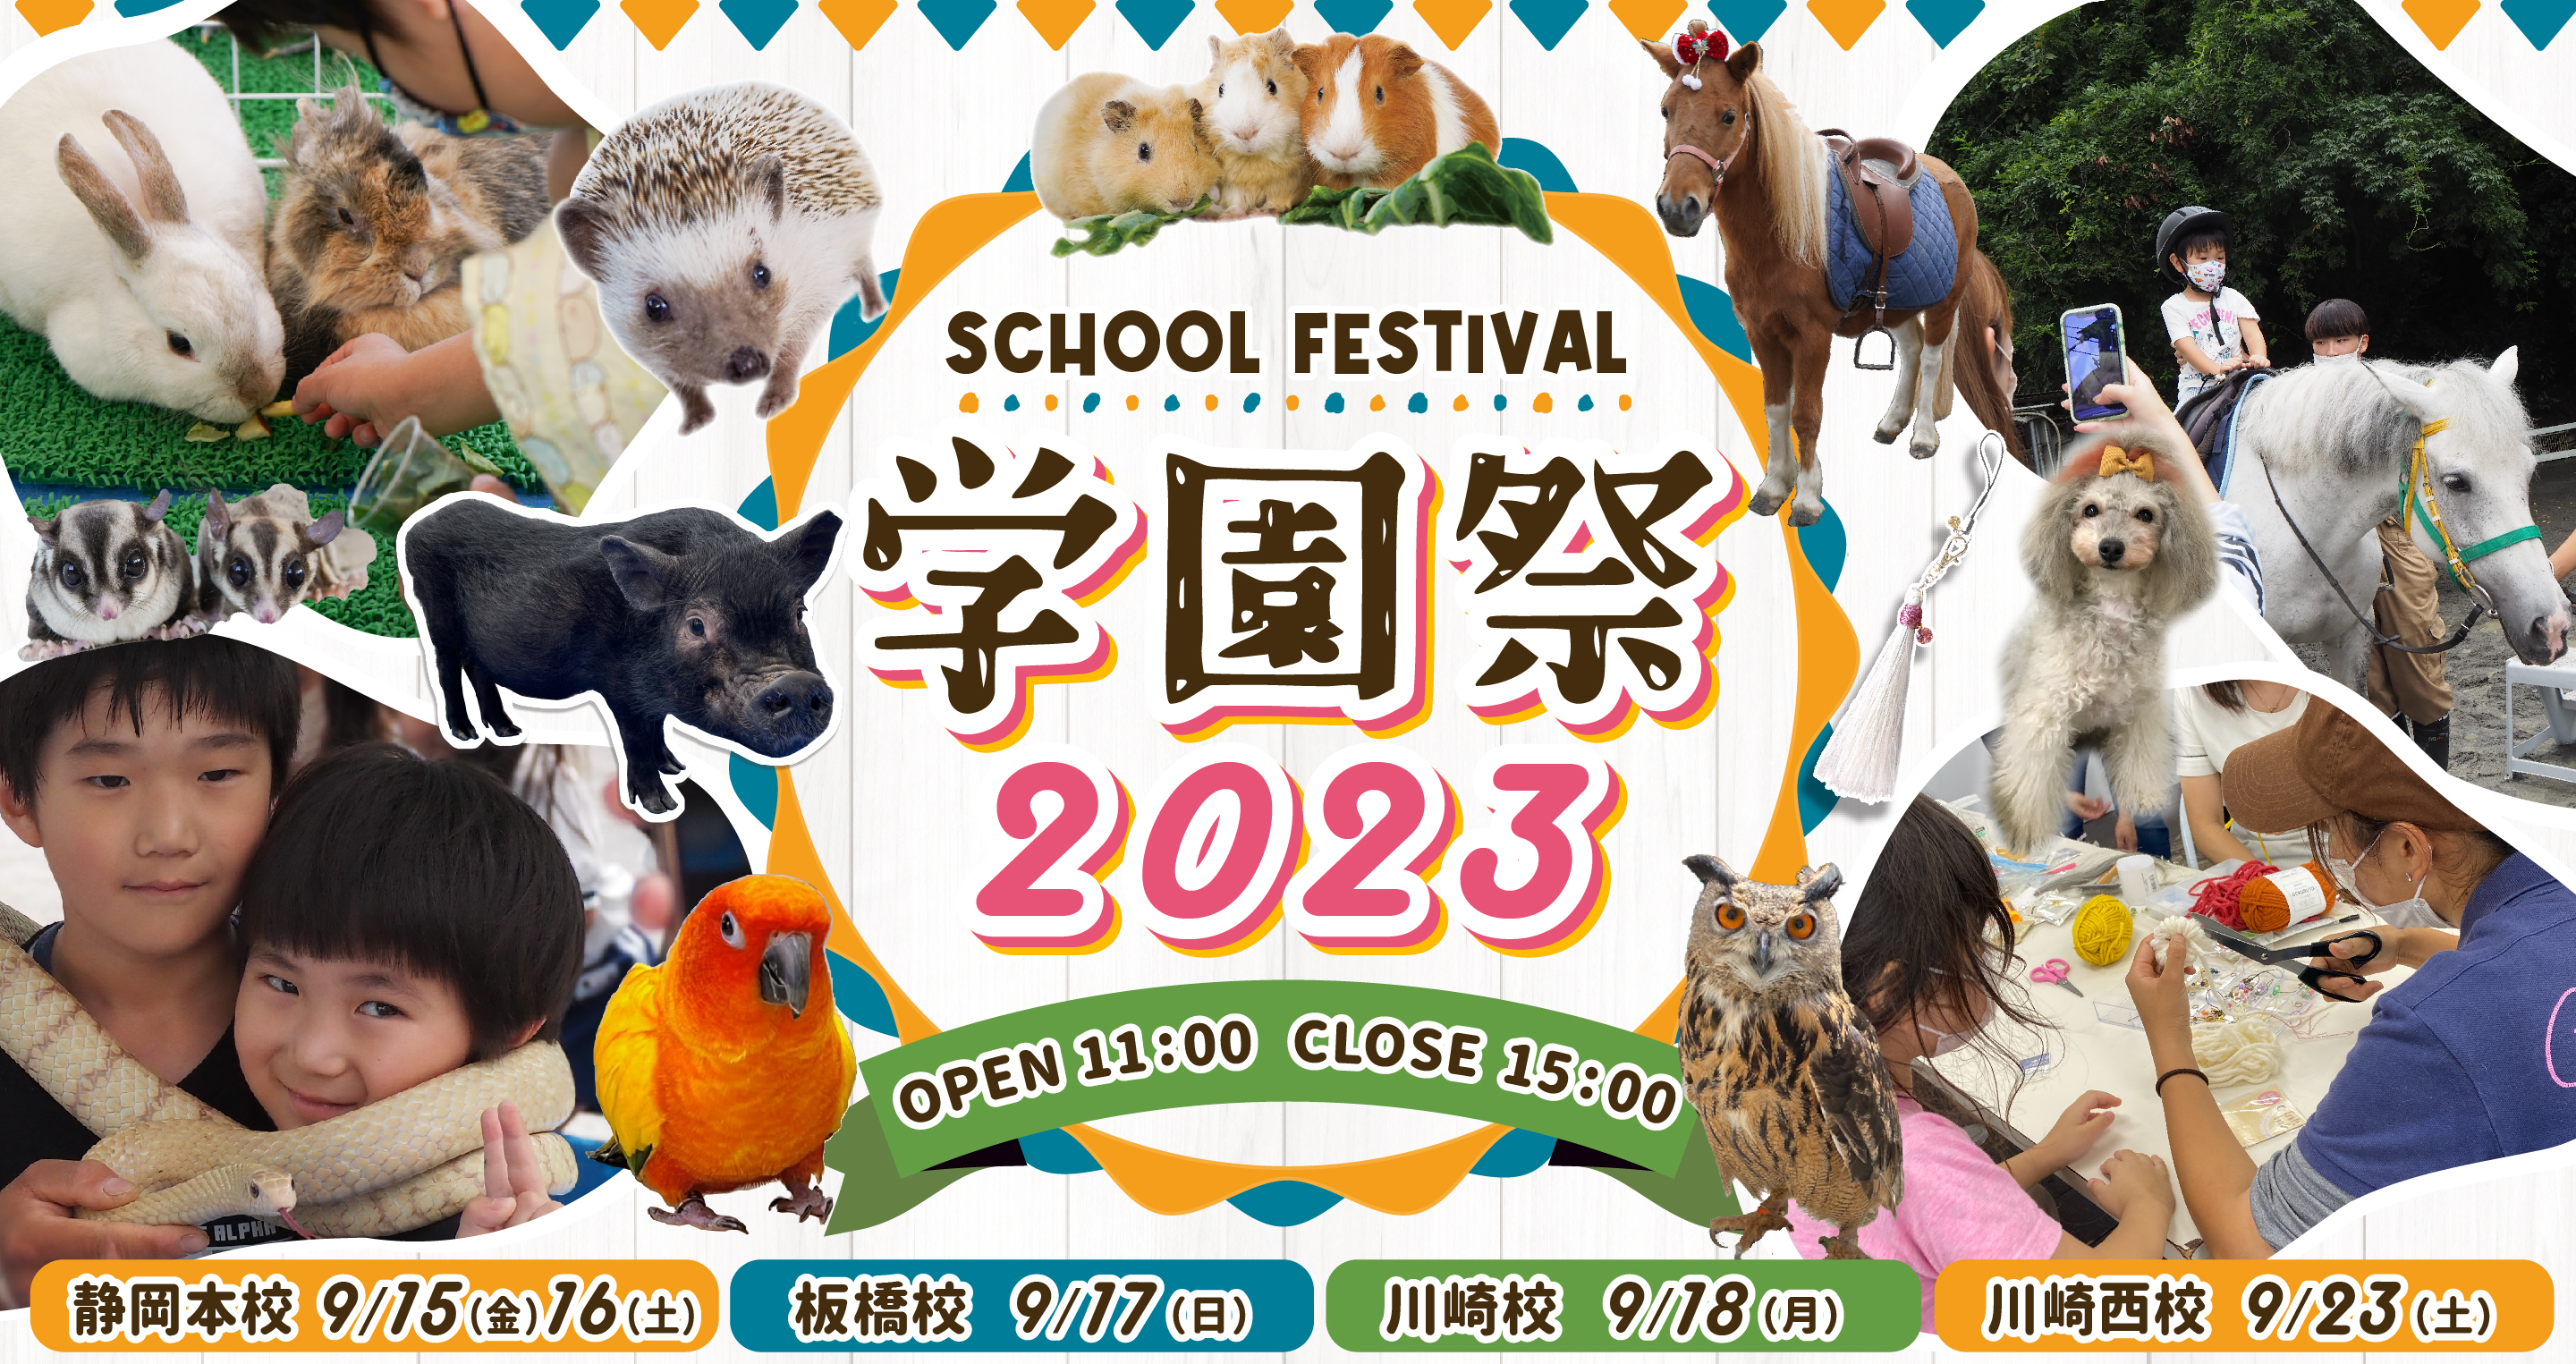 School Festival 2022